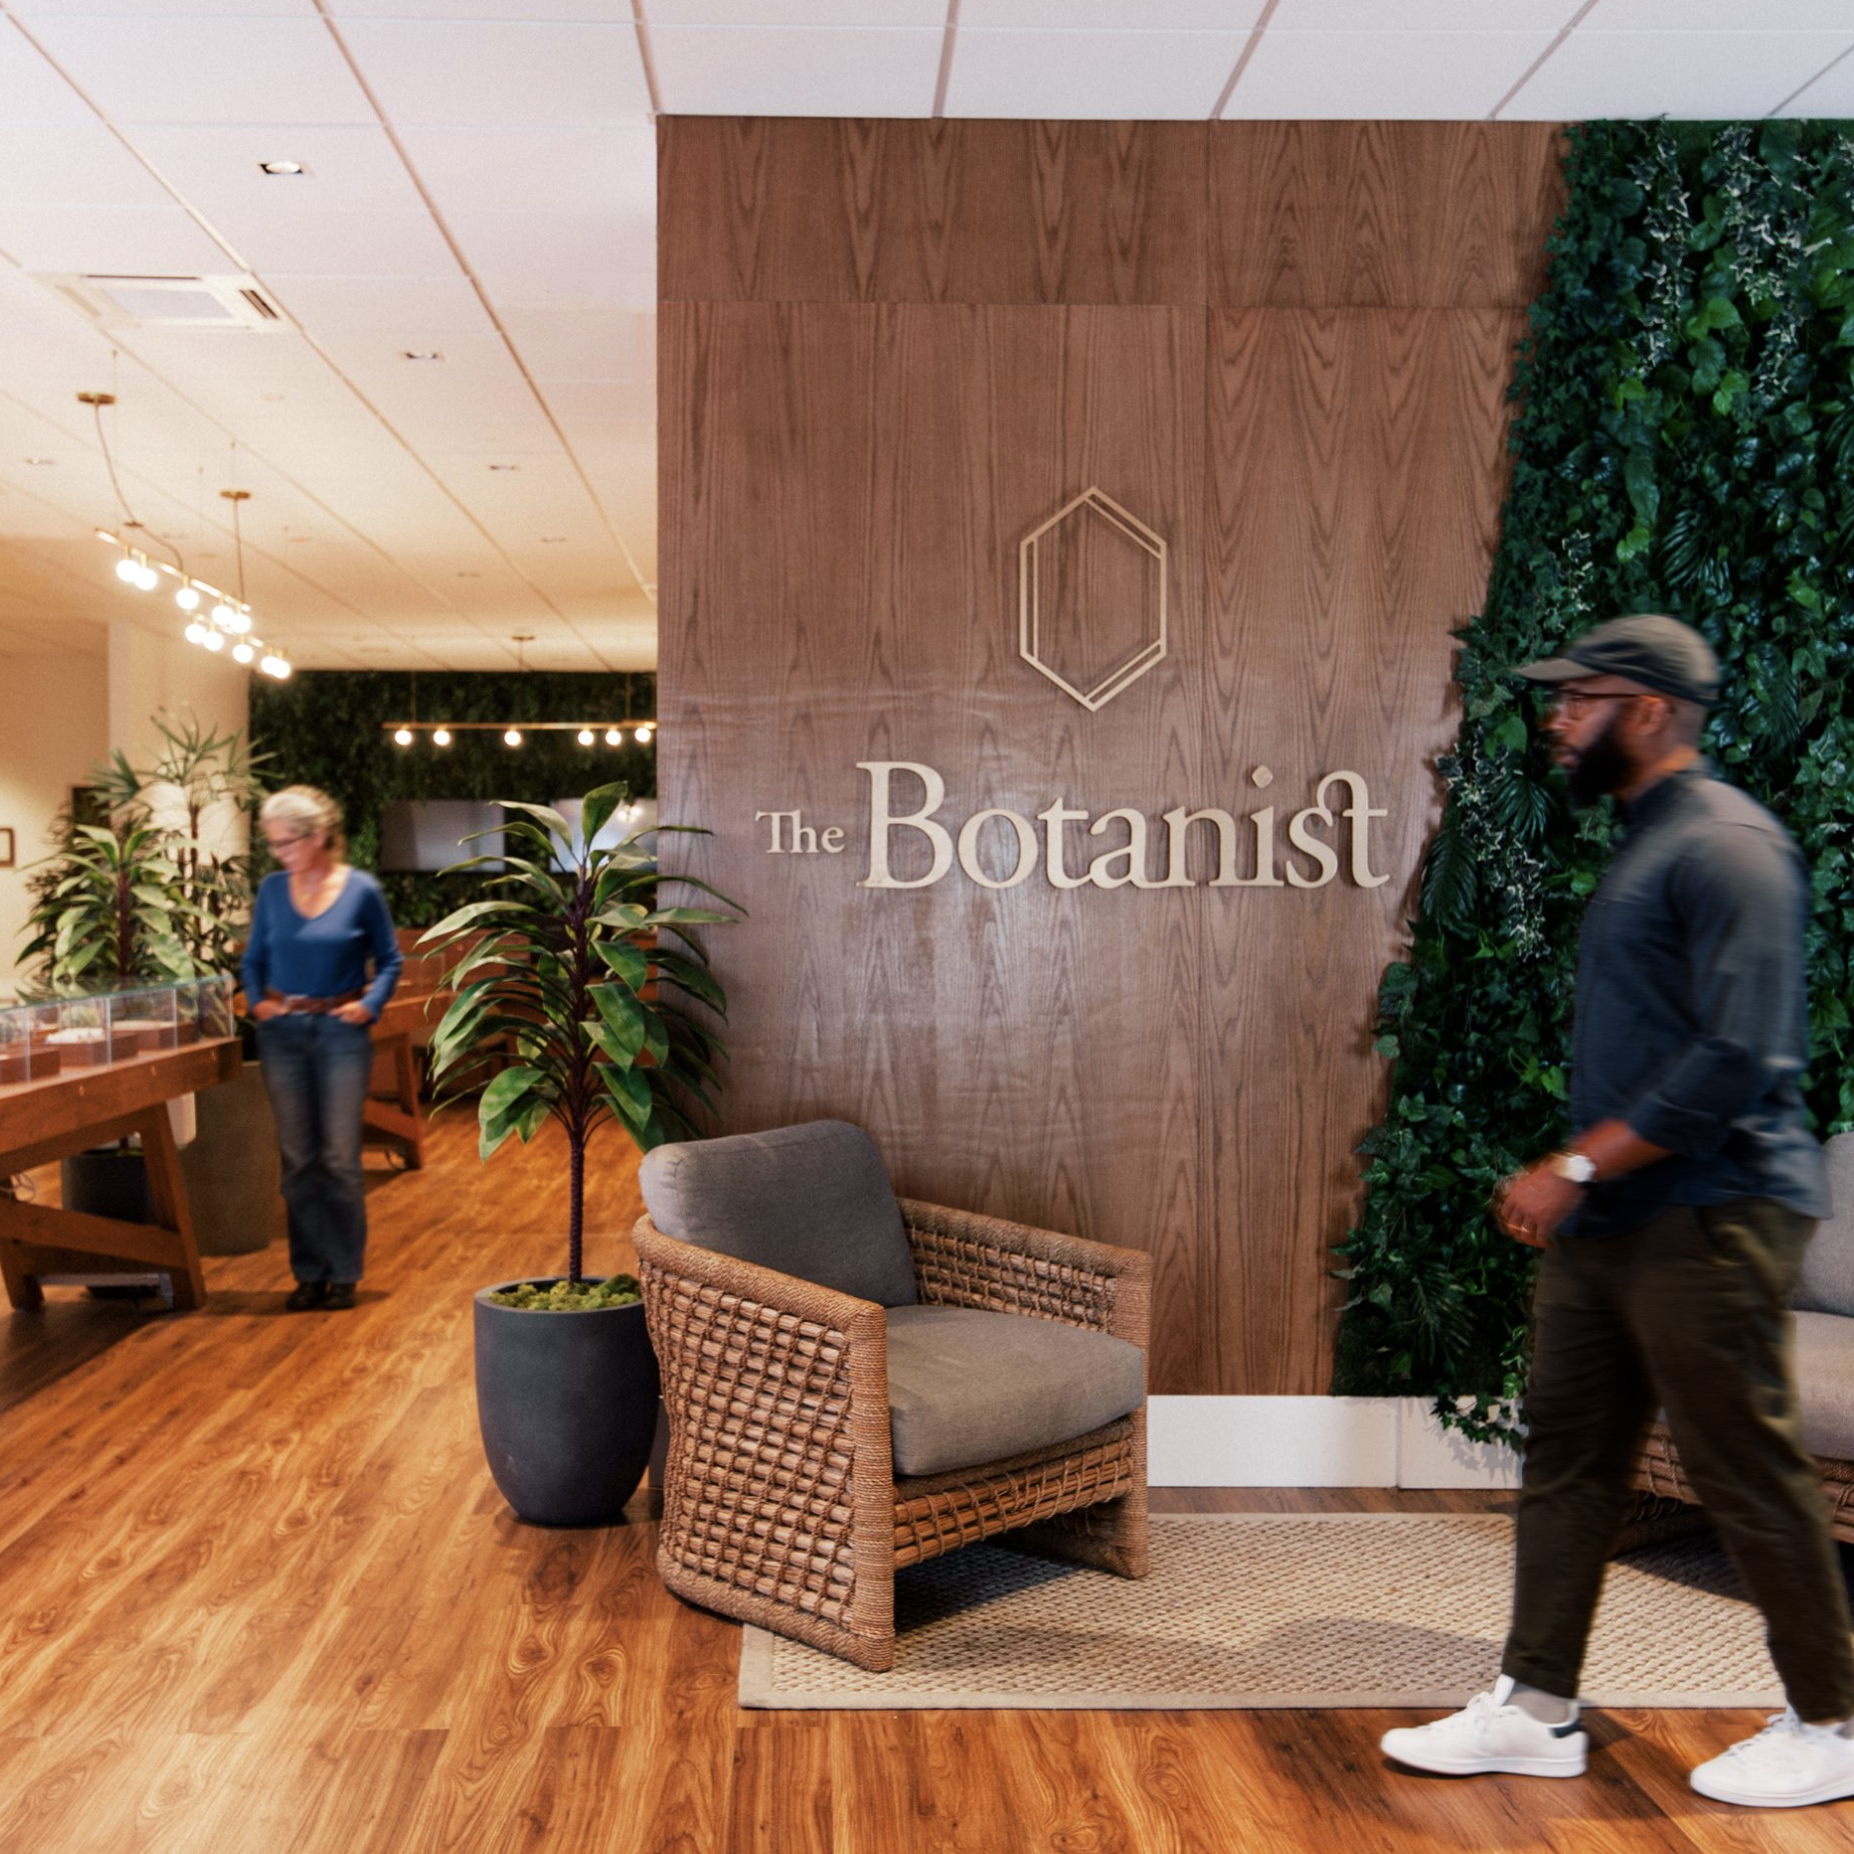 Man walking through Botanist dispensary interior